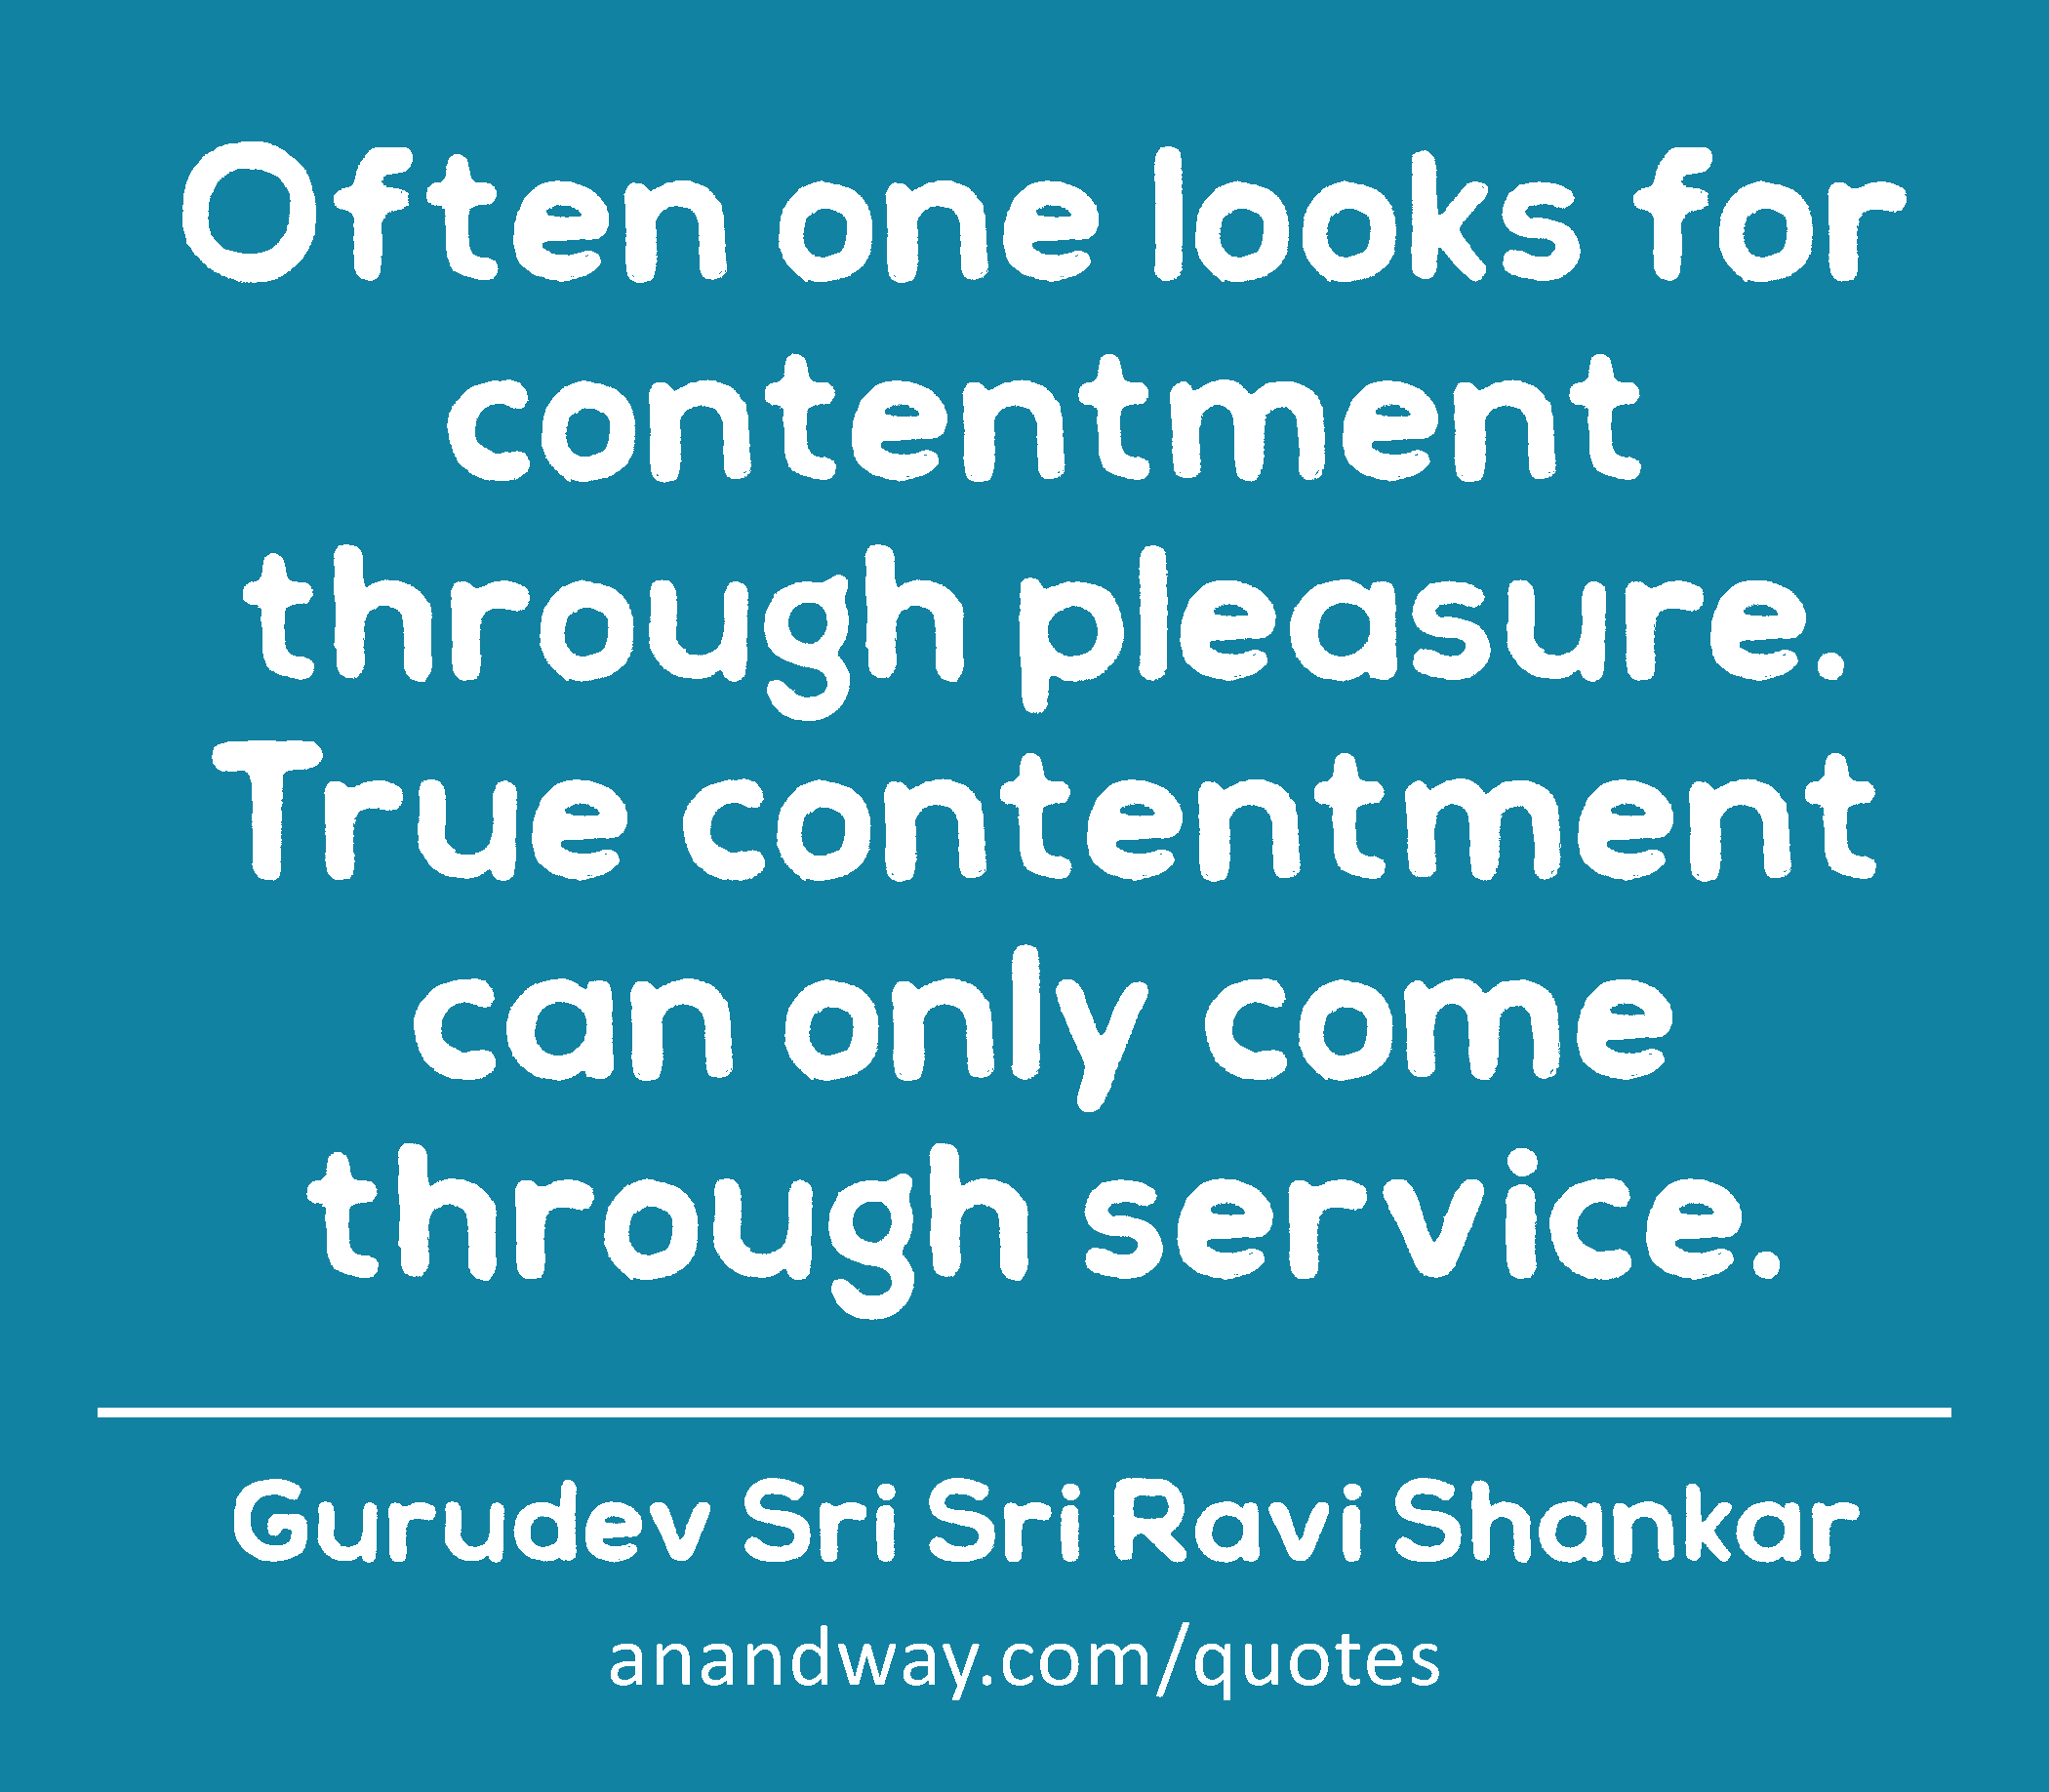 Often one looks for contentment through pleasure. True contentment can only come through service. 
 -Gurudev Sri Sri Ravi Shankar